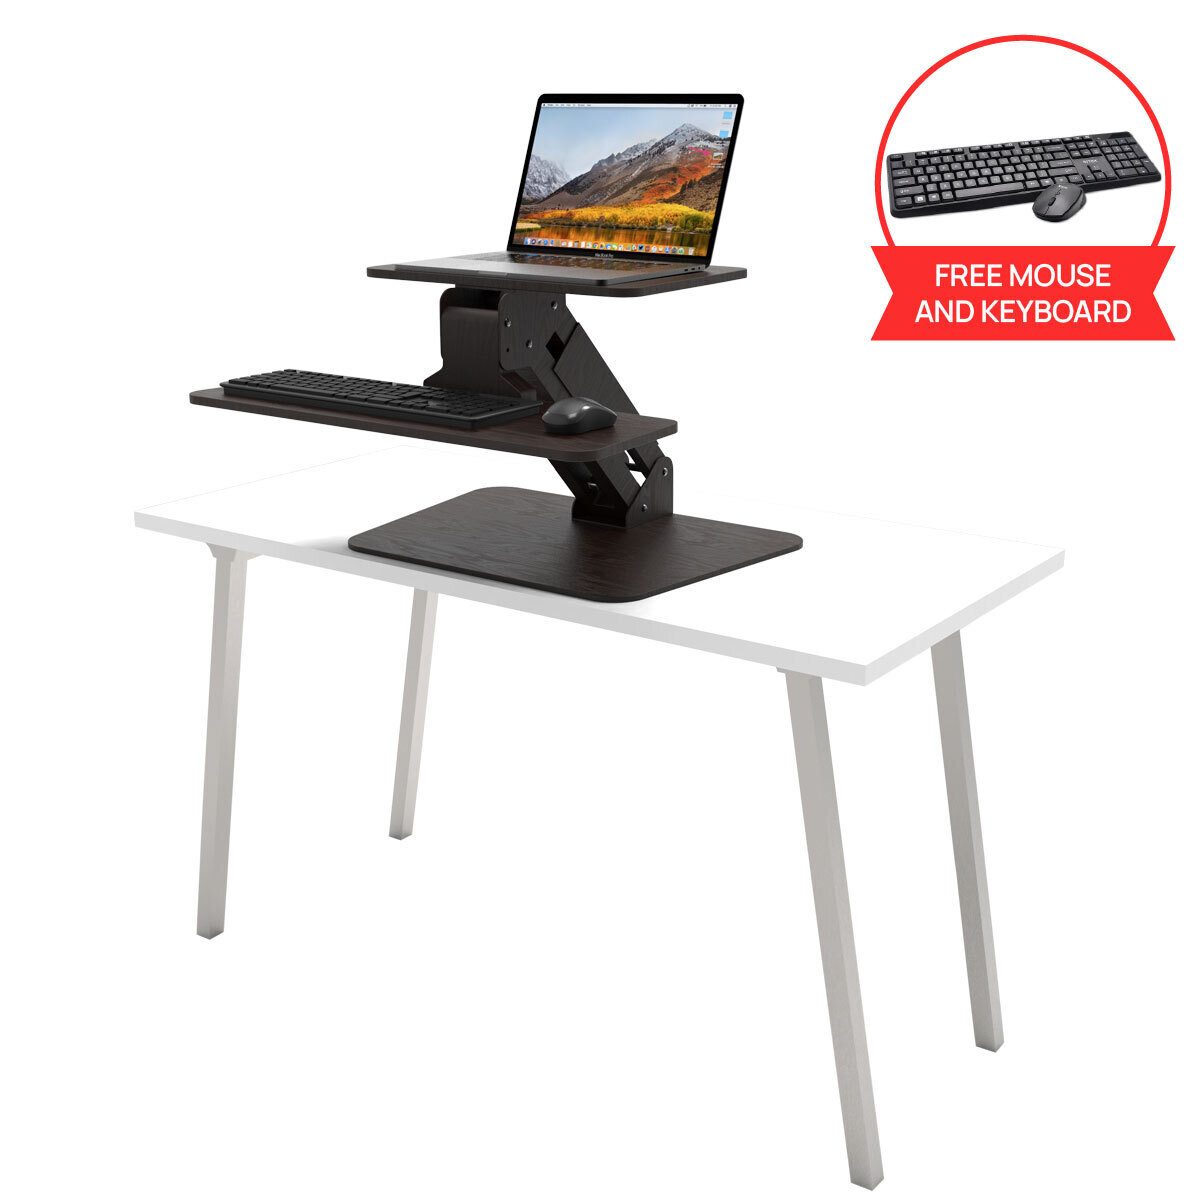 LIFT Grande: Sit/stand desk converter